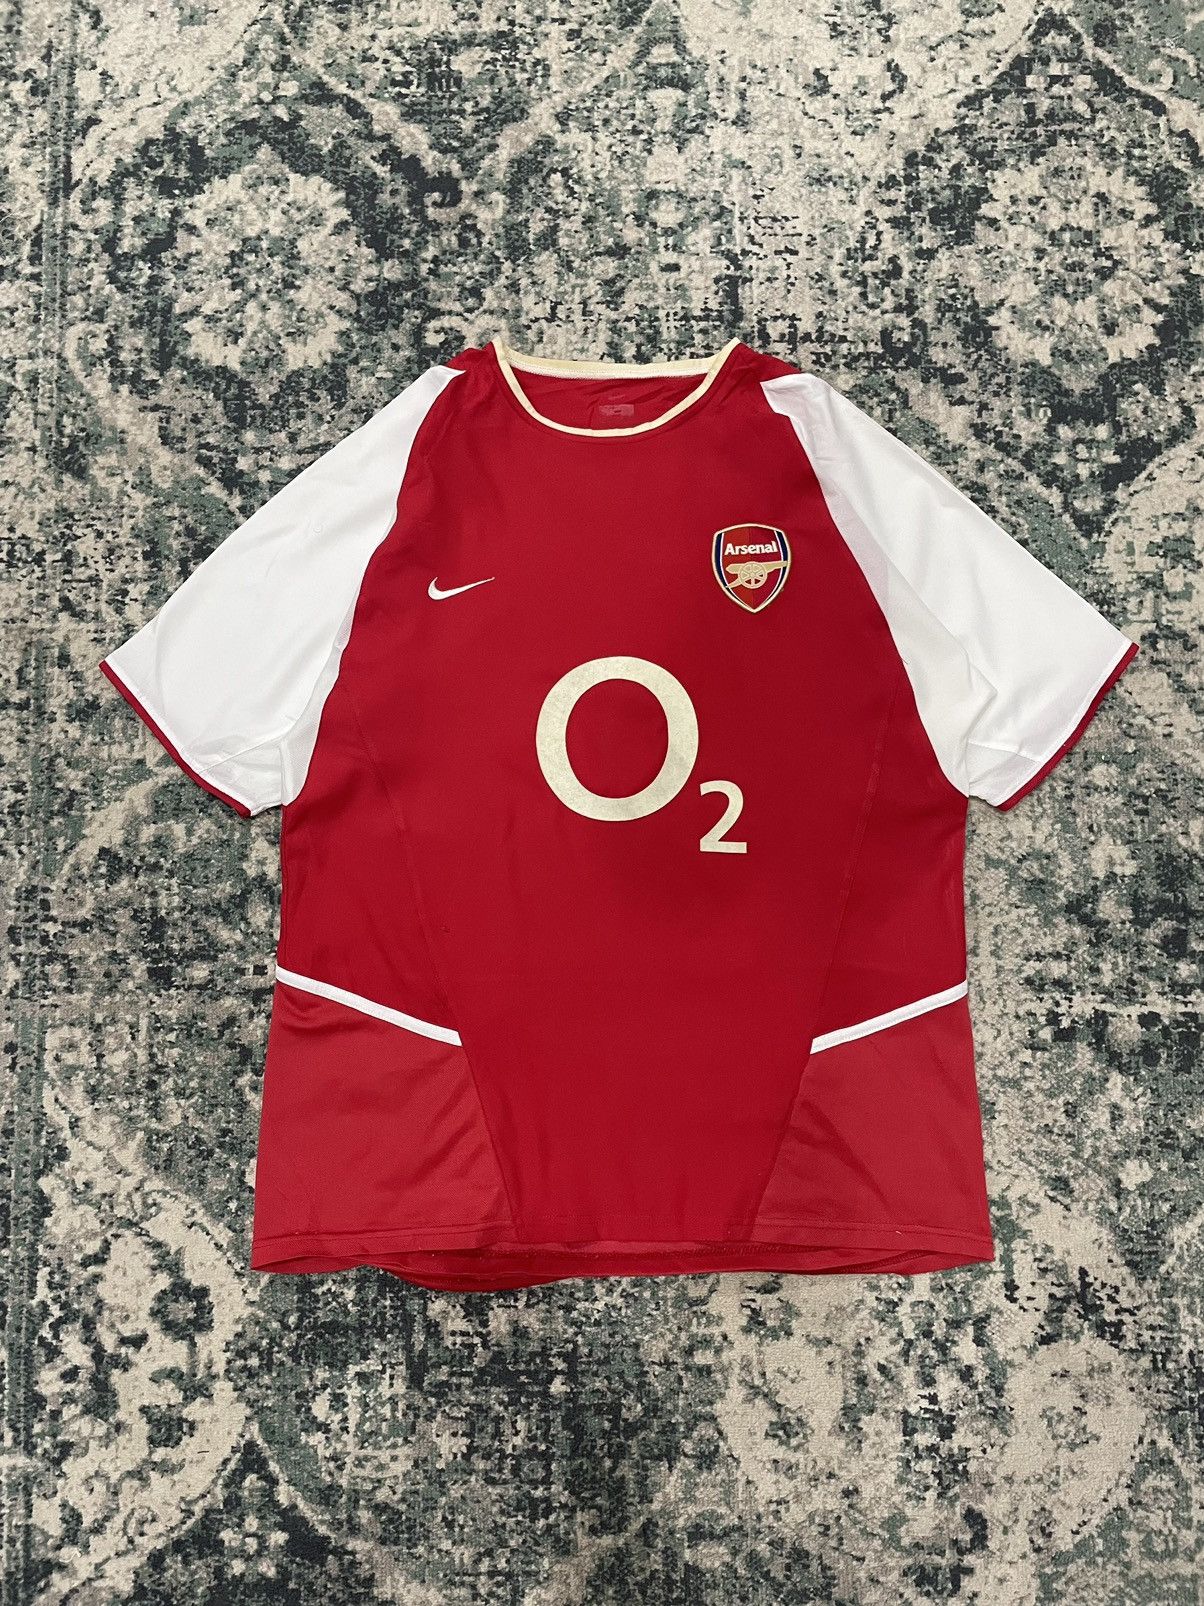 Arsenal 02/03 Vintage Jersey - 2